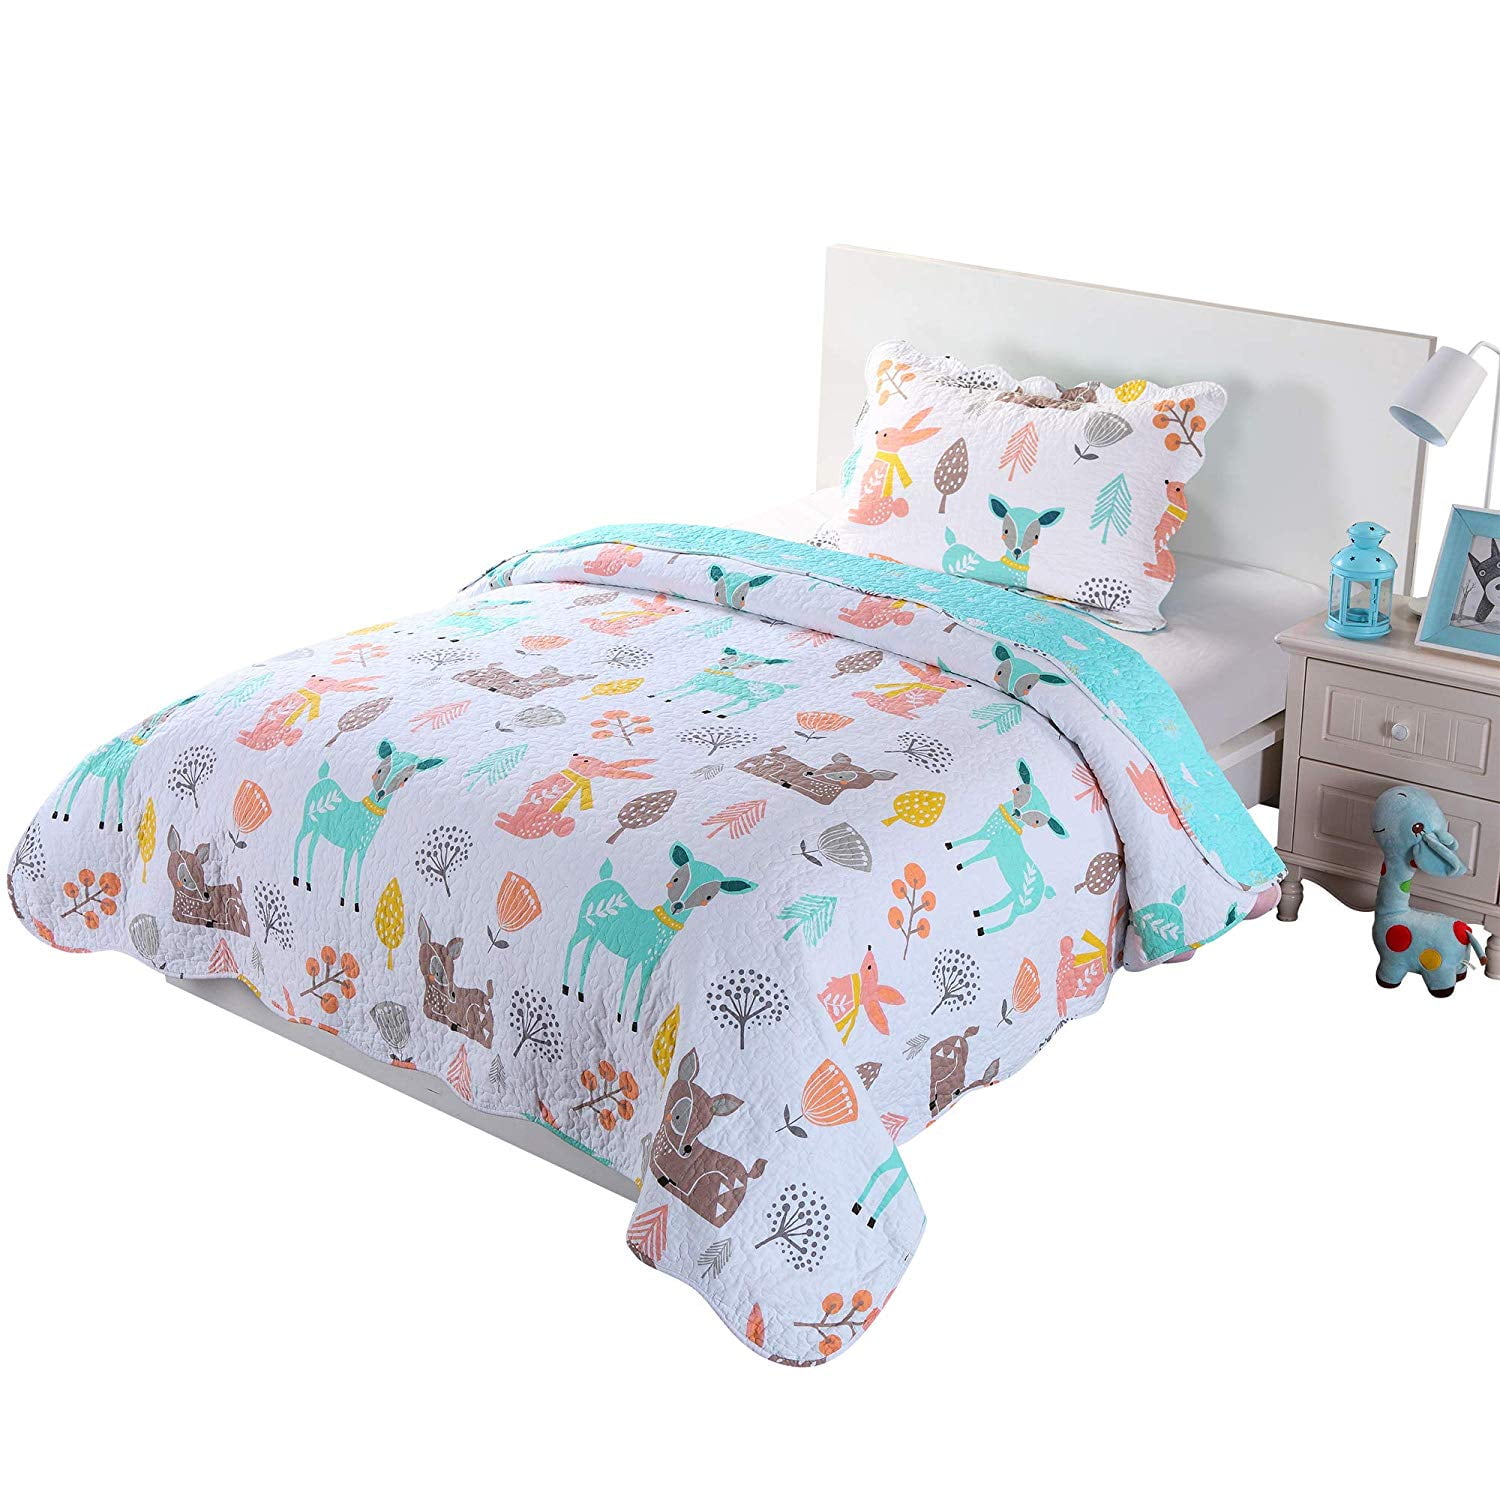 2/3 Pcs Kids Quilt Set Lightweight Bedspread Decoration Throw Blanket Teens Boys Girls Bed Printed Bunk Bedding Coverlet Comforter Set Elephant Quilt A95 Twin 